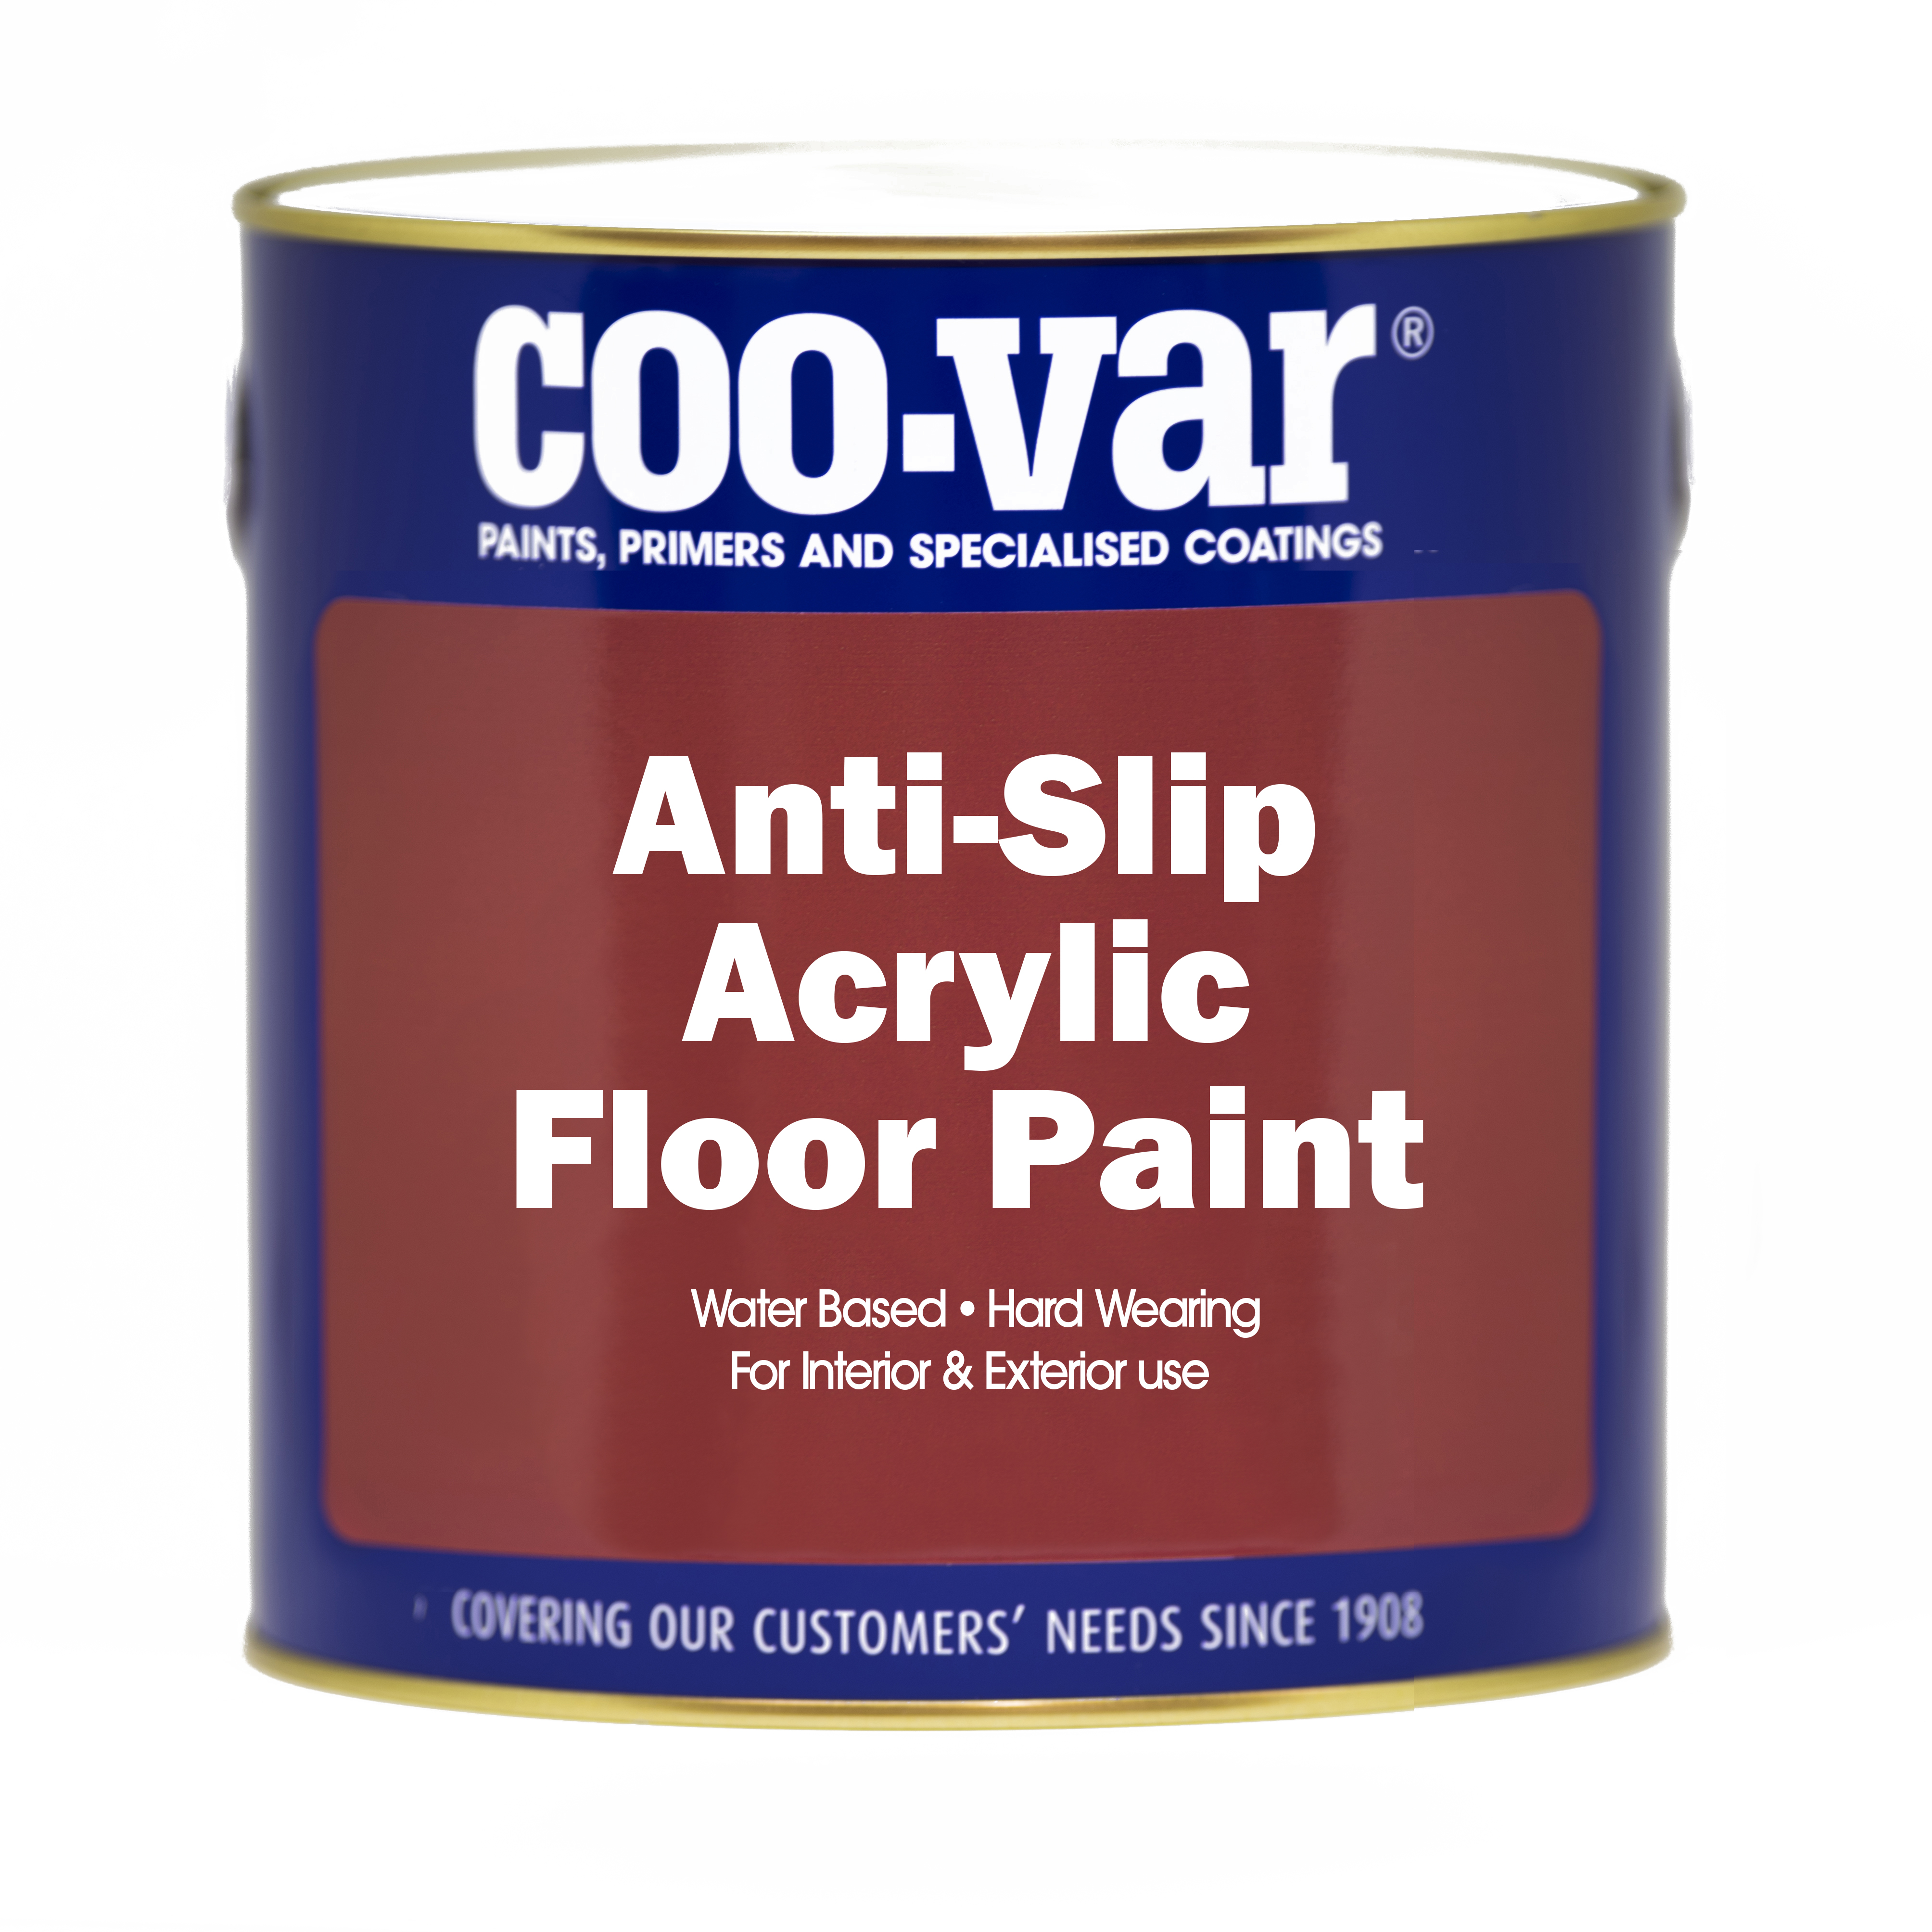 Coo-Var’s Latest Anti-Slip Floor Paint